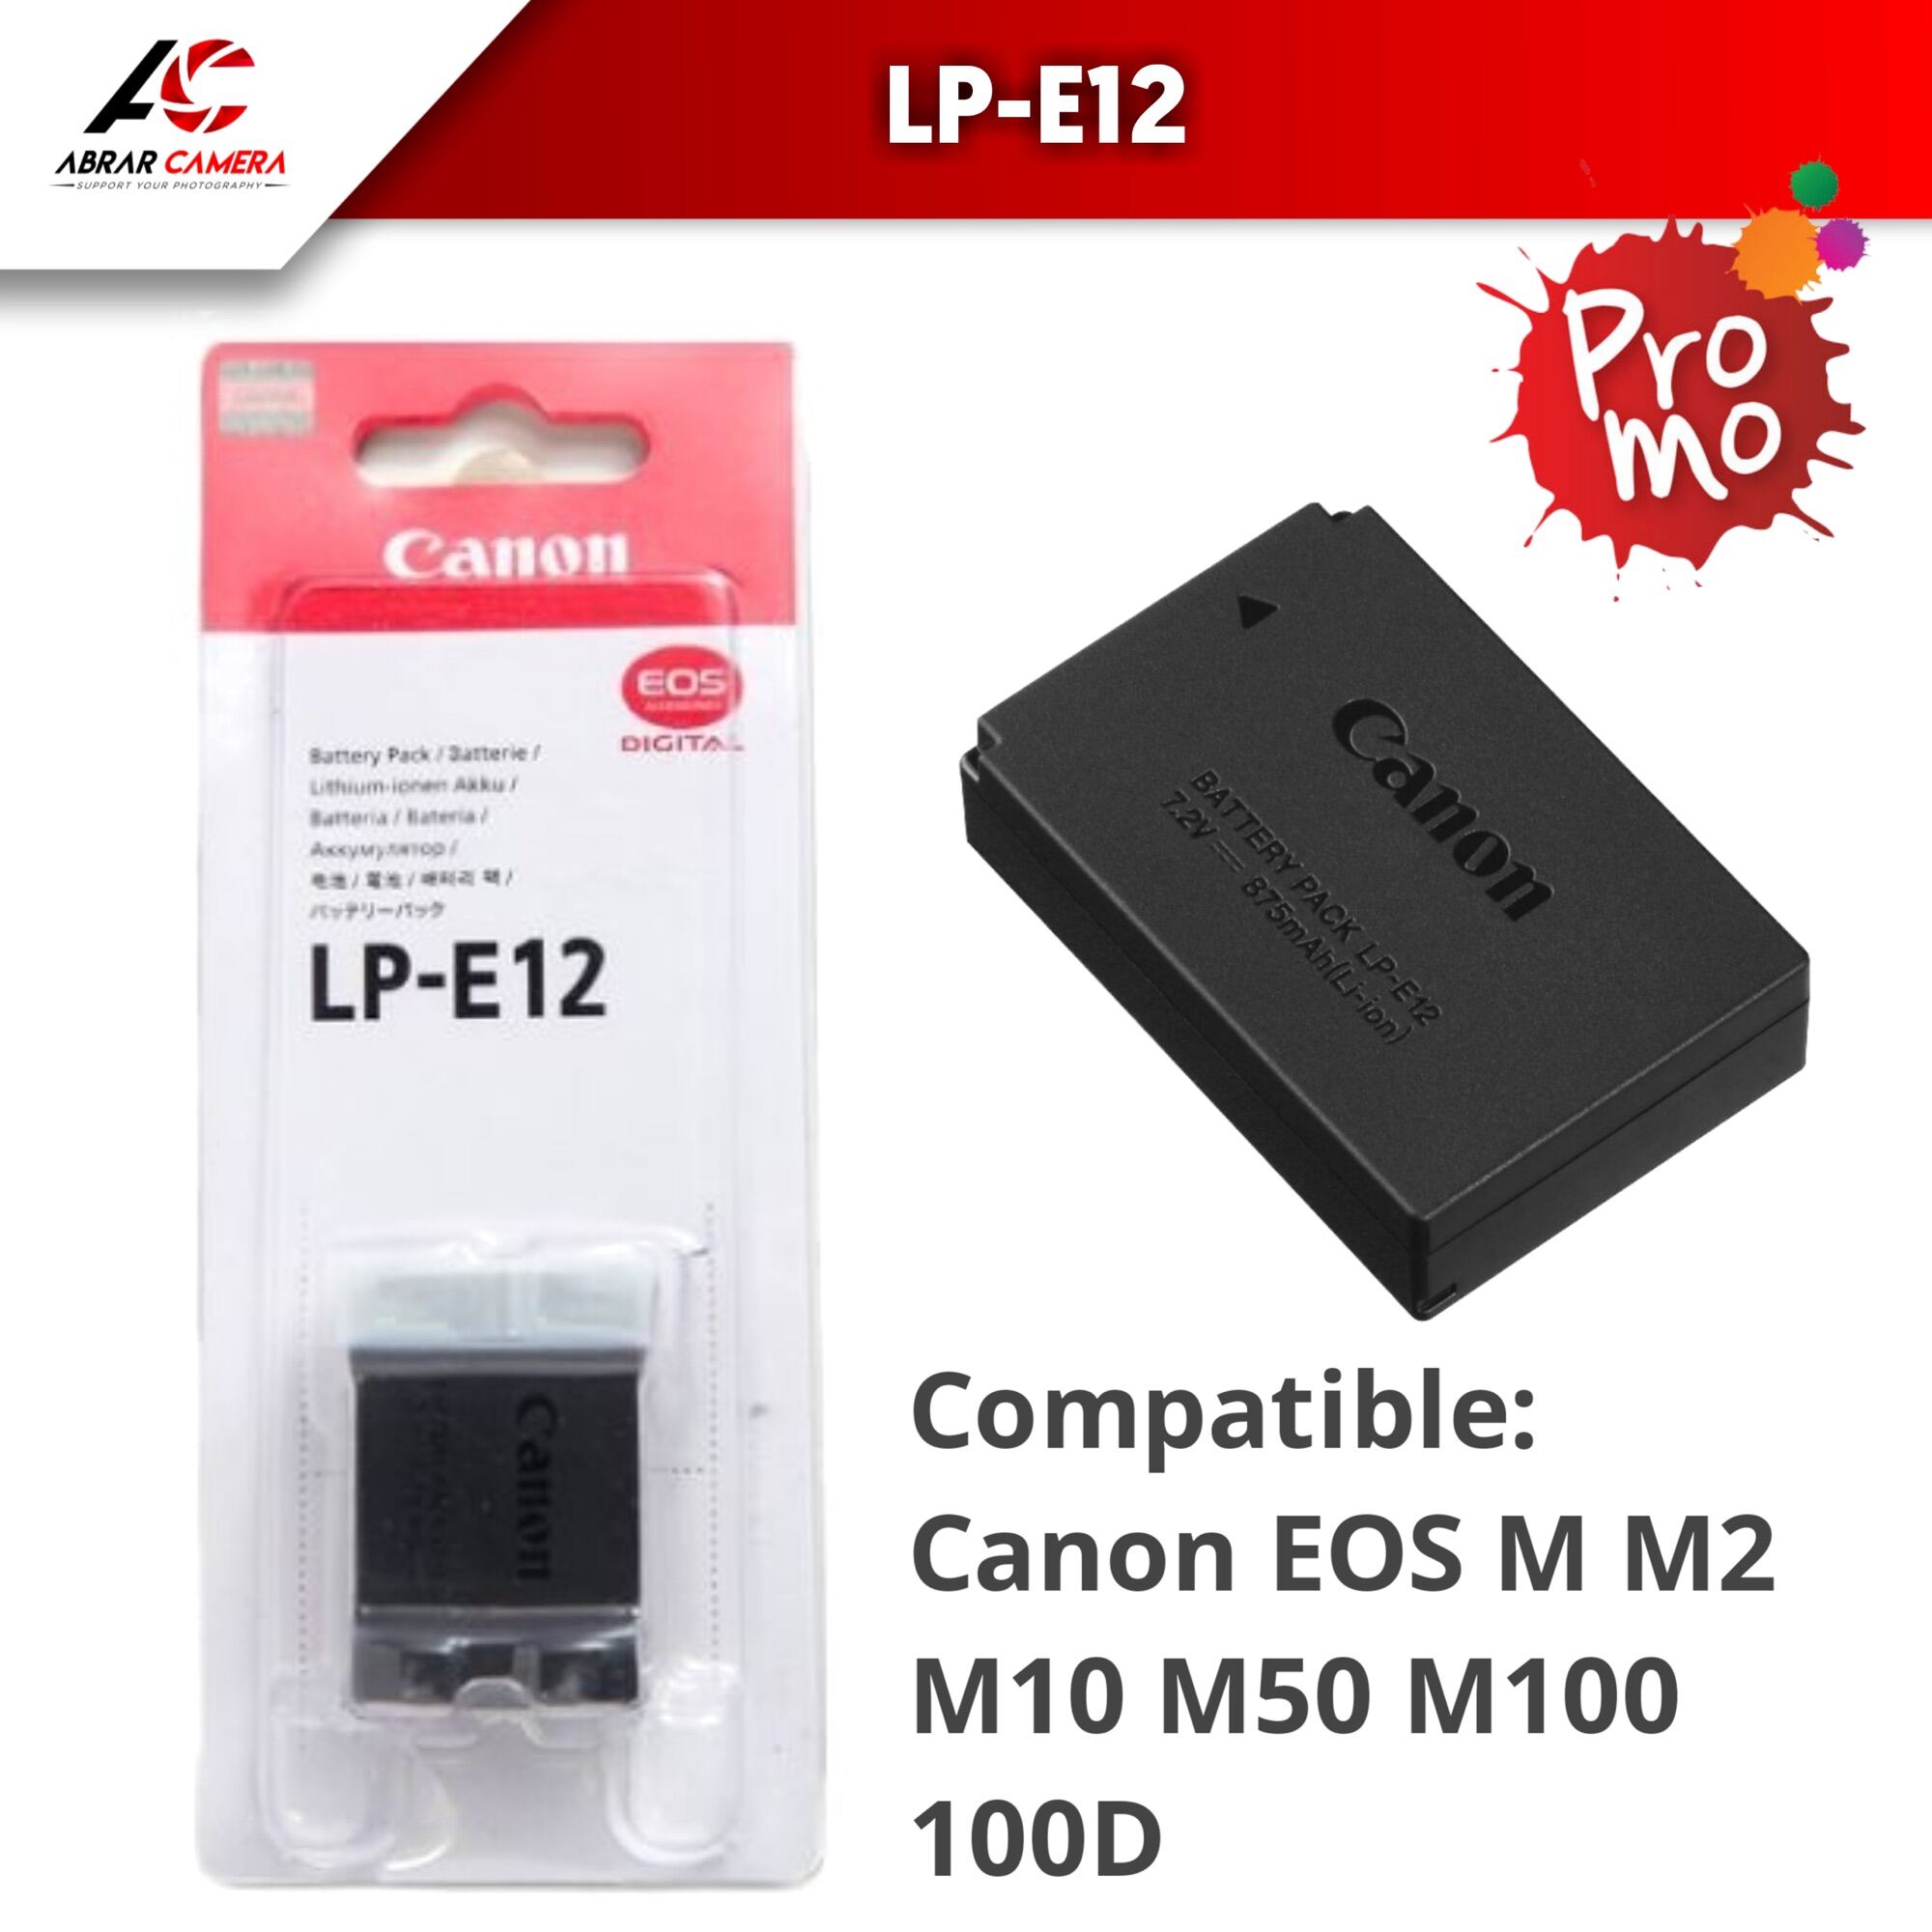 Battery Pack LP-E12 - Pro Photo